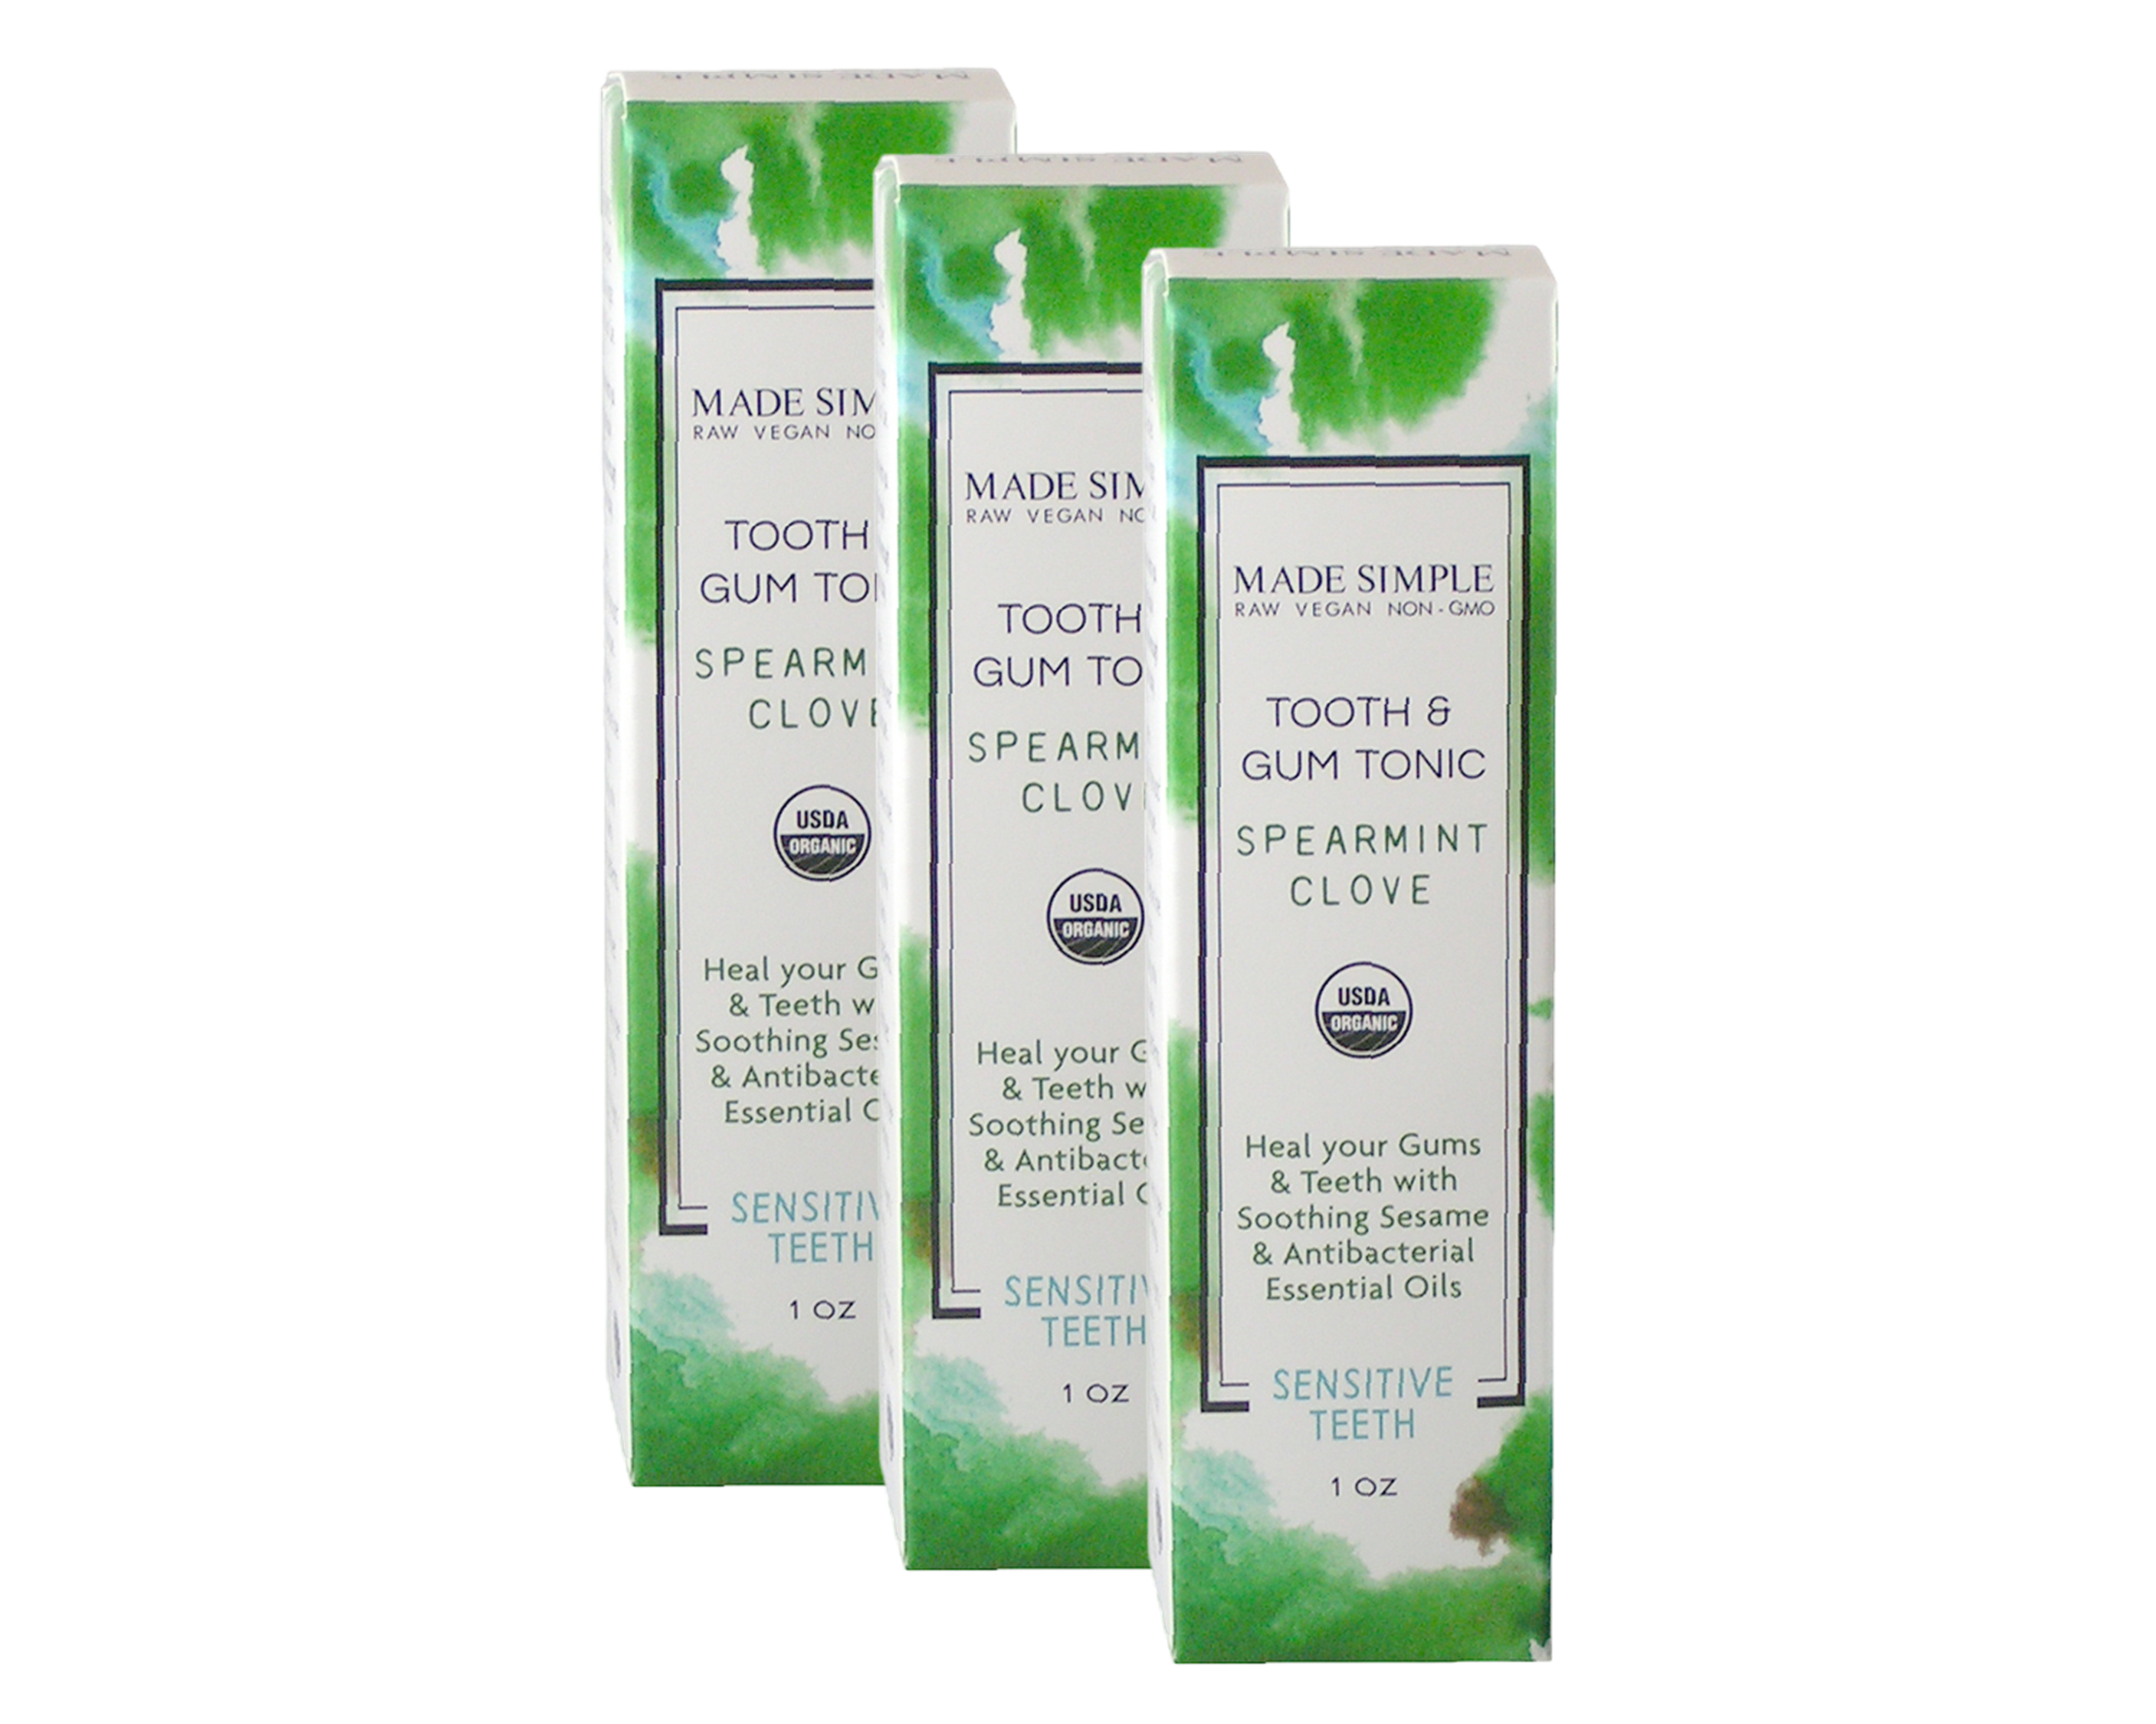 Made-Simple-Skin-Care-Tooth-Gum-Tonic-Spearmint-Clove-USDA-Certified-Organic-Raw-Vegan-NonGMO trio